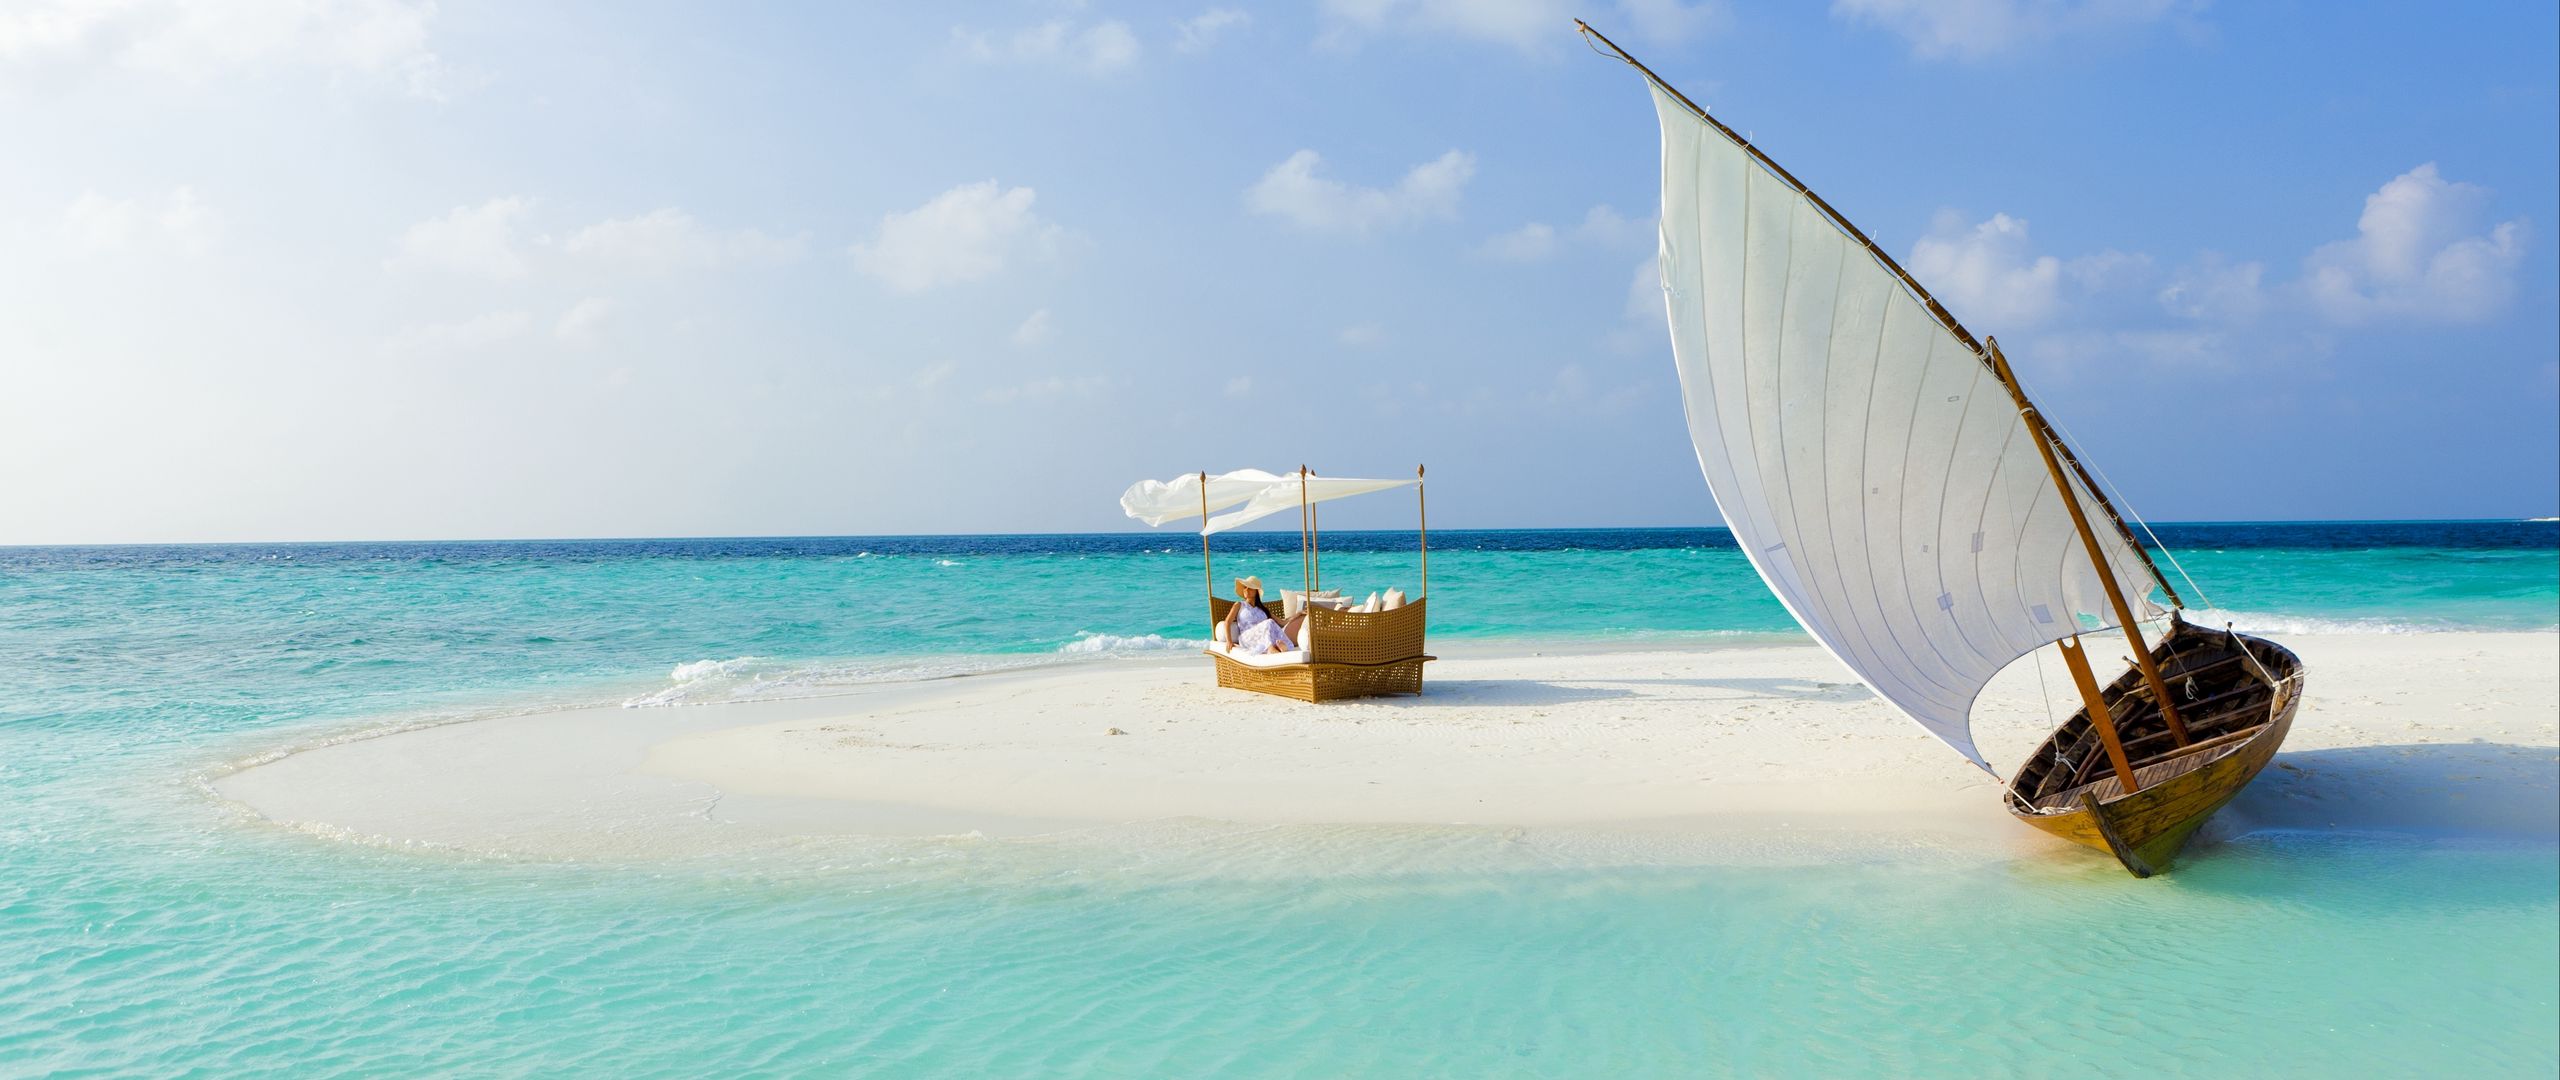 Download wallpaper 2560x1080 maldives, beach, tropical, sea, sand, island, boat, summer dual wide 1080p HD background